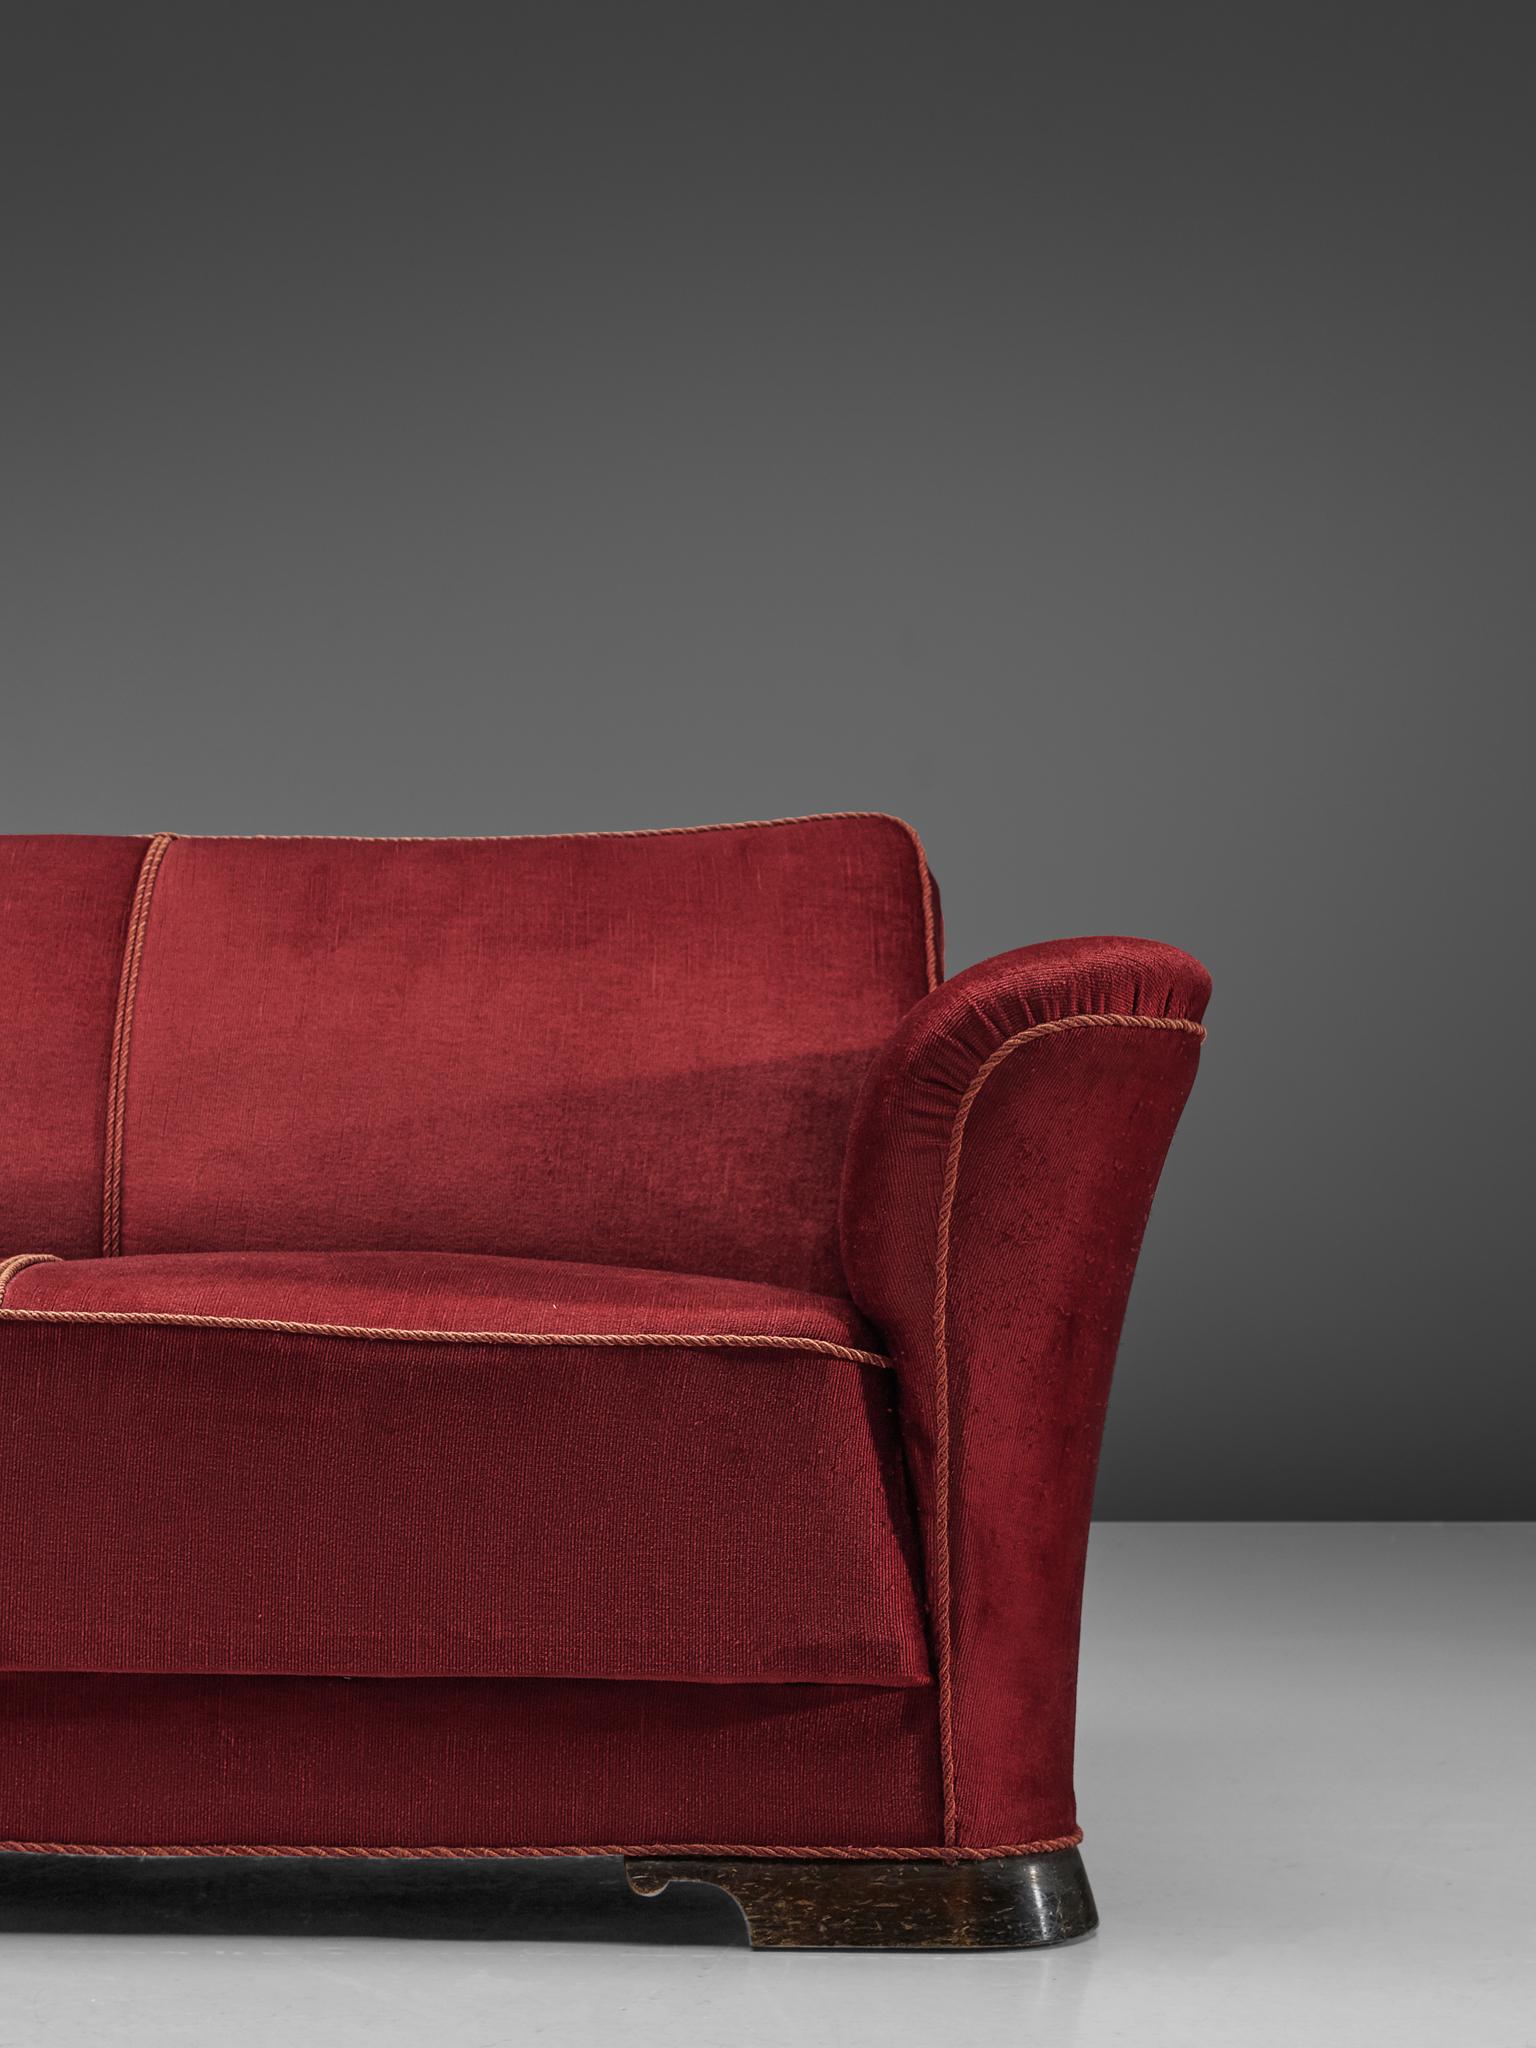 Mid-20th Century Danish Three-Seat Sofa in Red Velours, 1940s